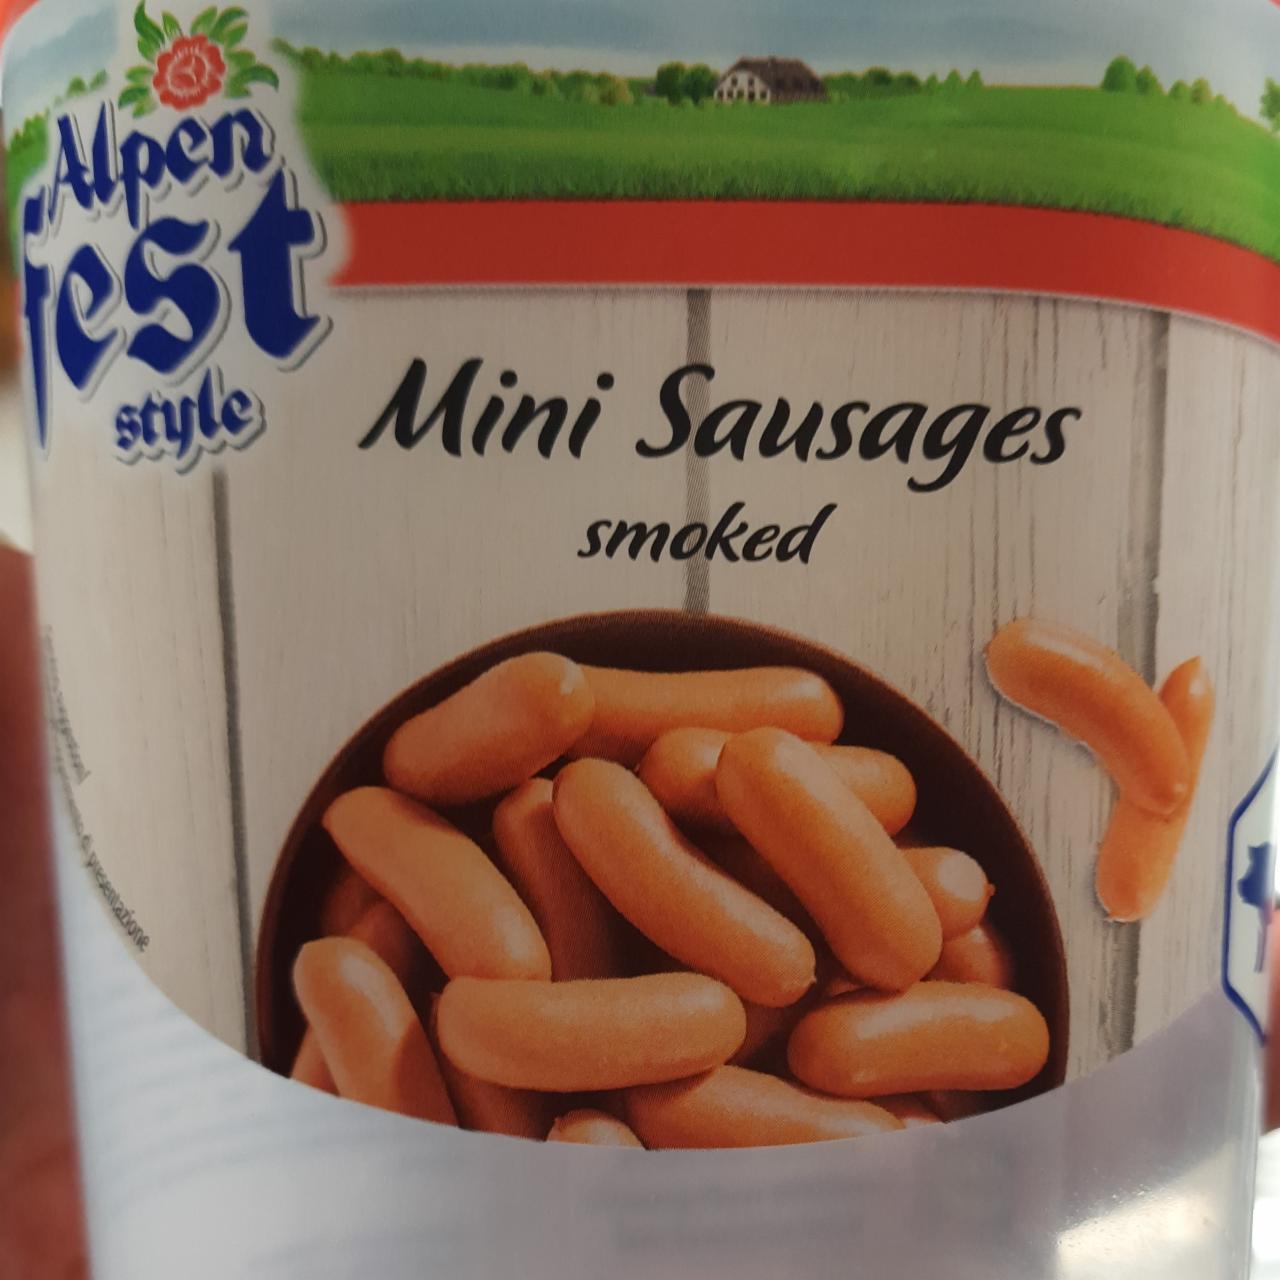 Fotografie - Mini Sausages smoked Alpen fest style